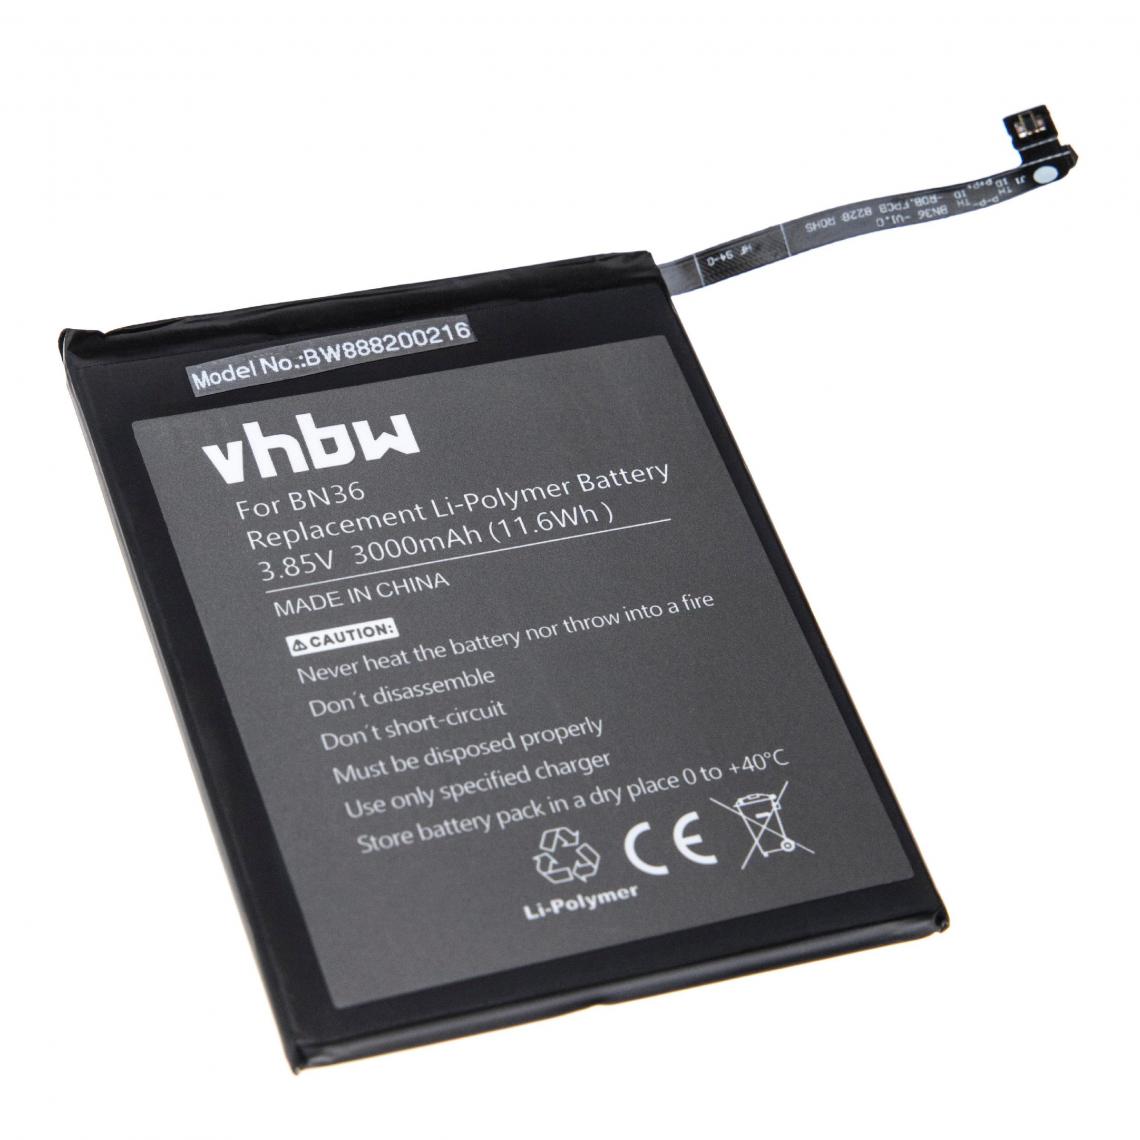 Vhbw - vhbw Li-Polymère batterie 3000mAh (3.85V) pour téléphone portable mobil smartphone Xiaomi Wayne - Batterie téléphone